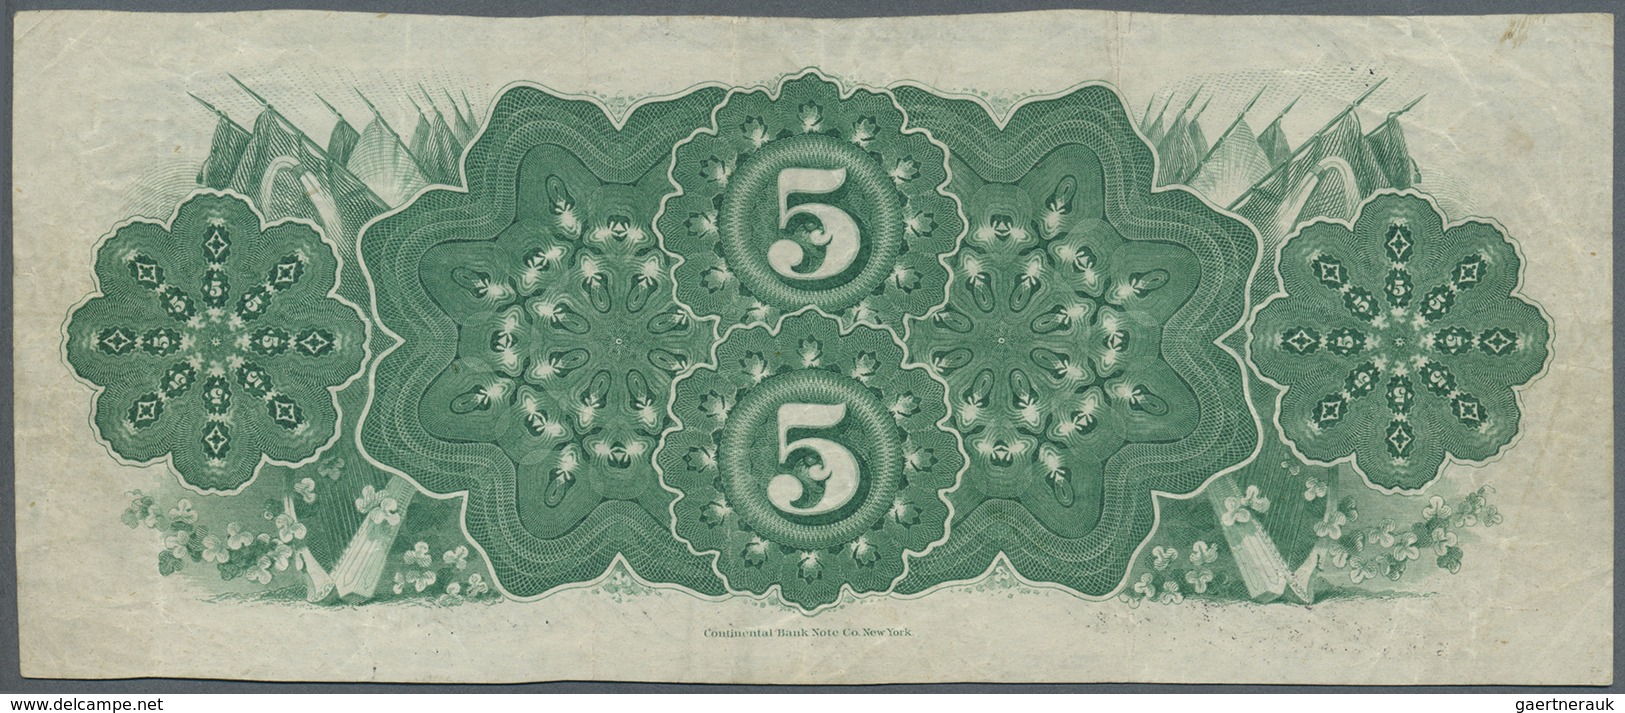 Ireland / Irland: "The Irish Republic" 5 Dollars 1866 P. S101, Used With Folds And Creases, One Tiny - Ireland